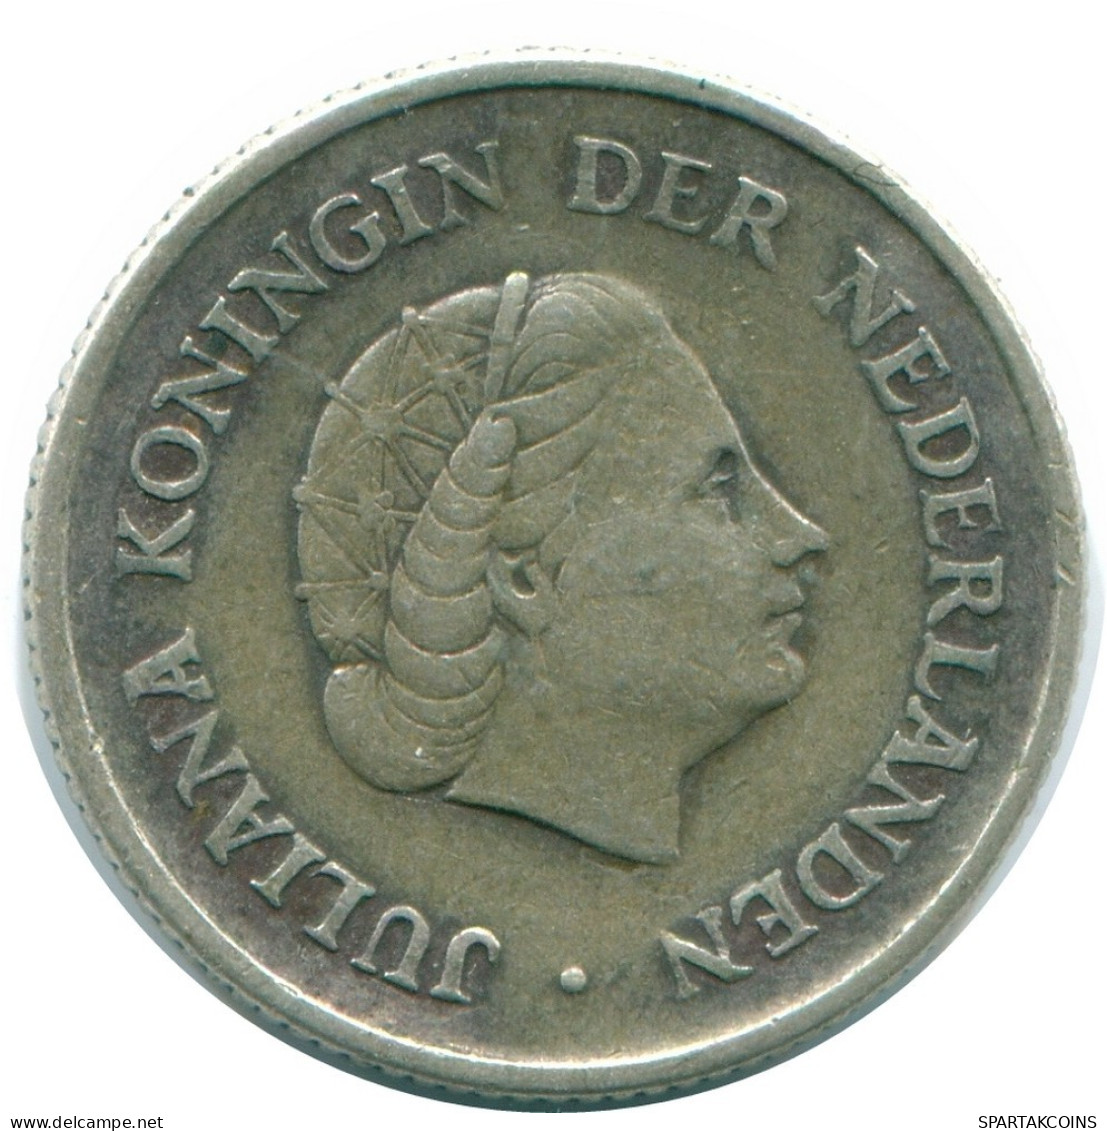 1/4 GULDEN 1965 NETHERLANDS ANTILLES SILVER Colonial Coin #NL11405.4.U.A - Antille Olandesi